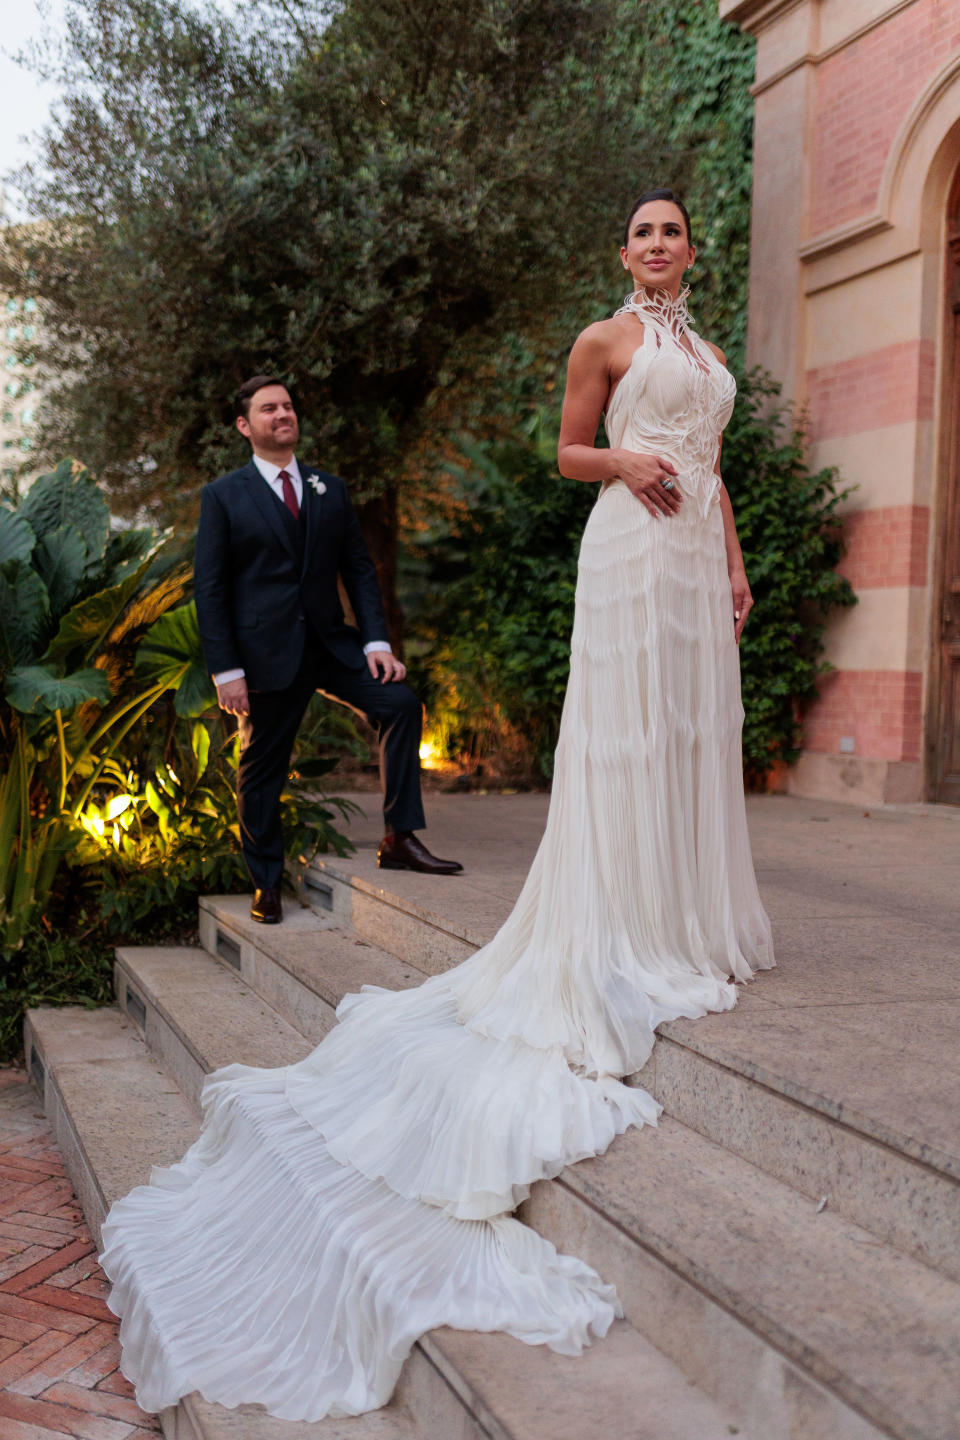 Roberto Toscano and Mariana Pavani on their wedding day.